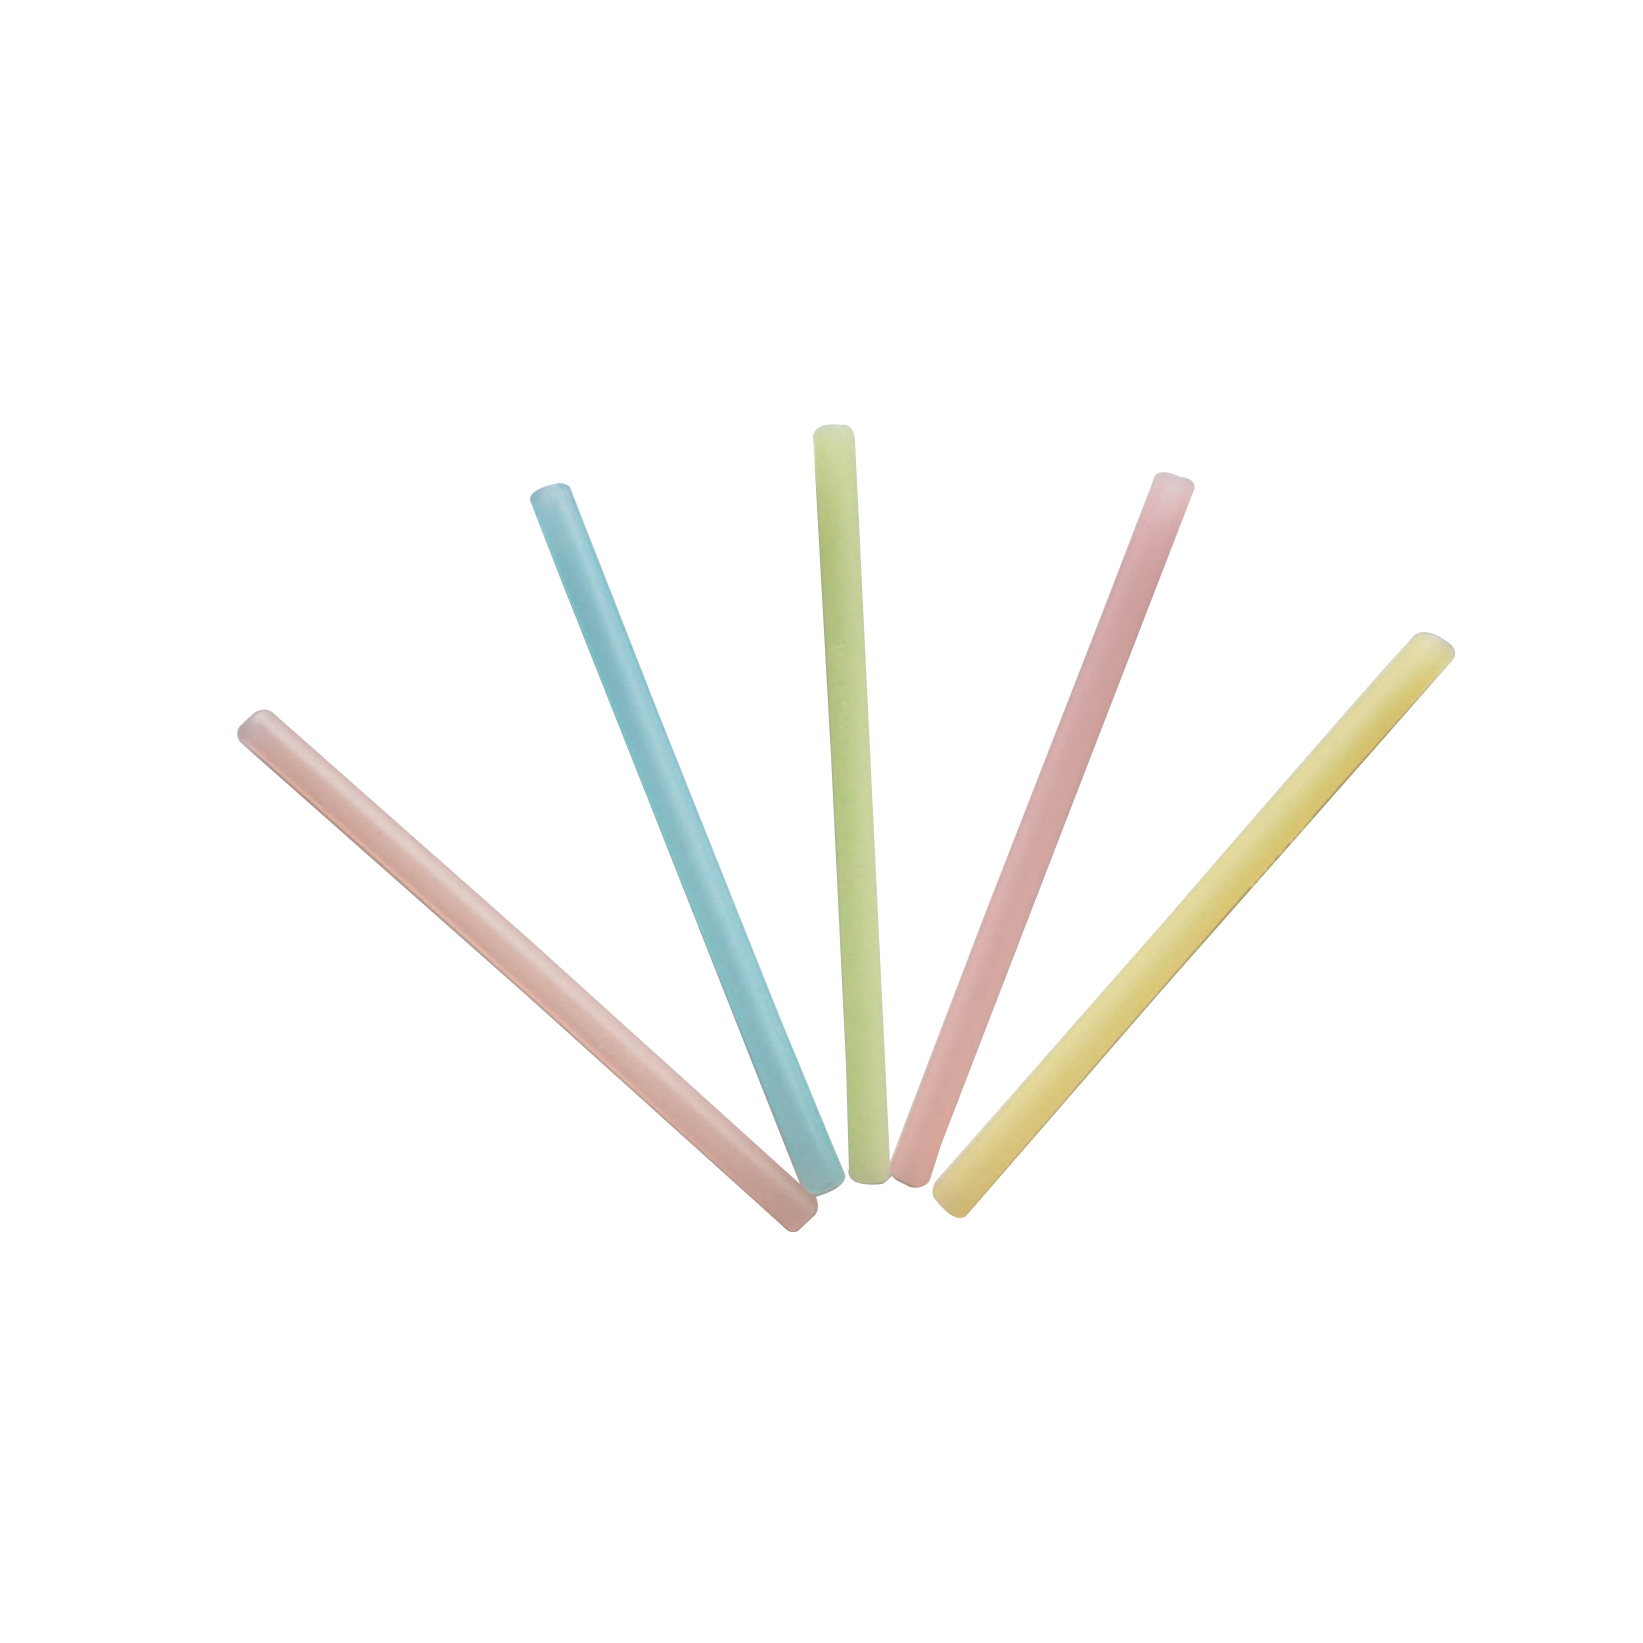 Silicone straws | Silicone VS plastic straw, which one will you choose?